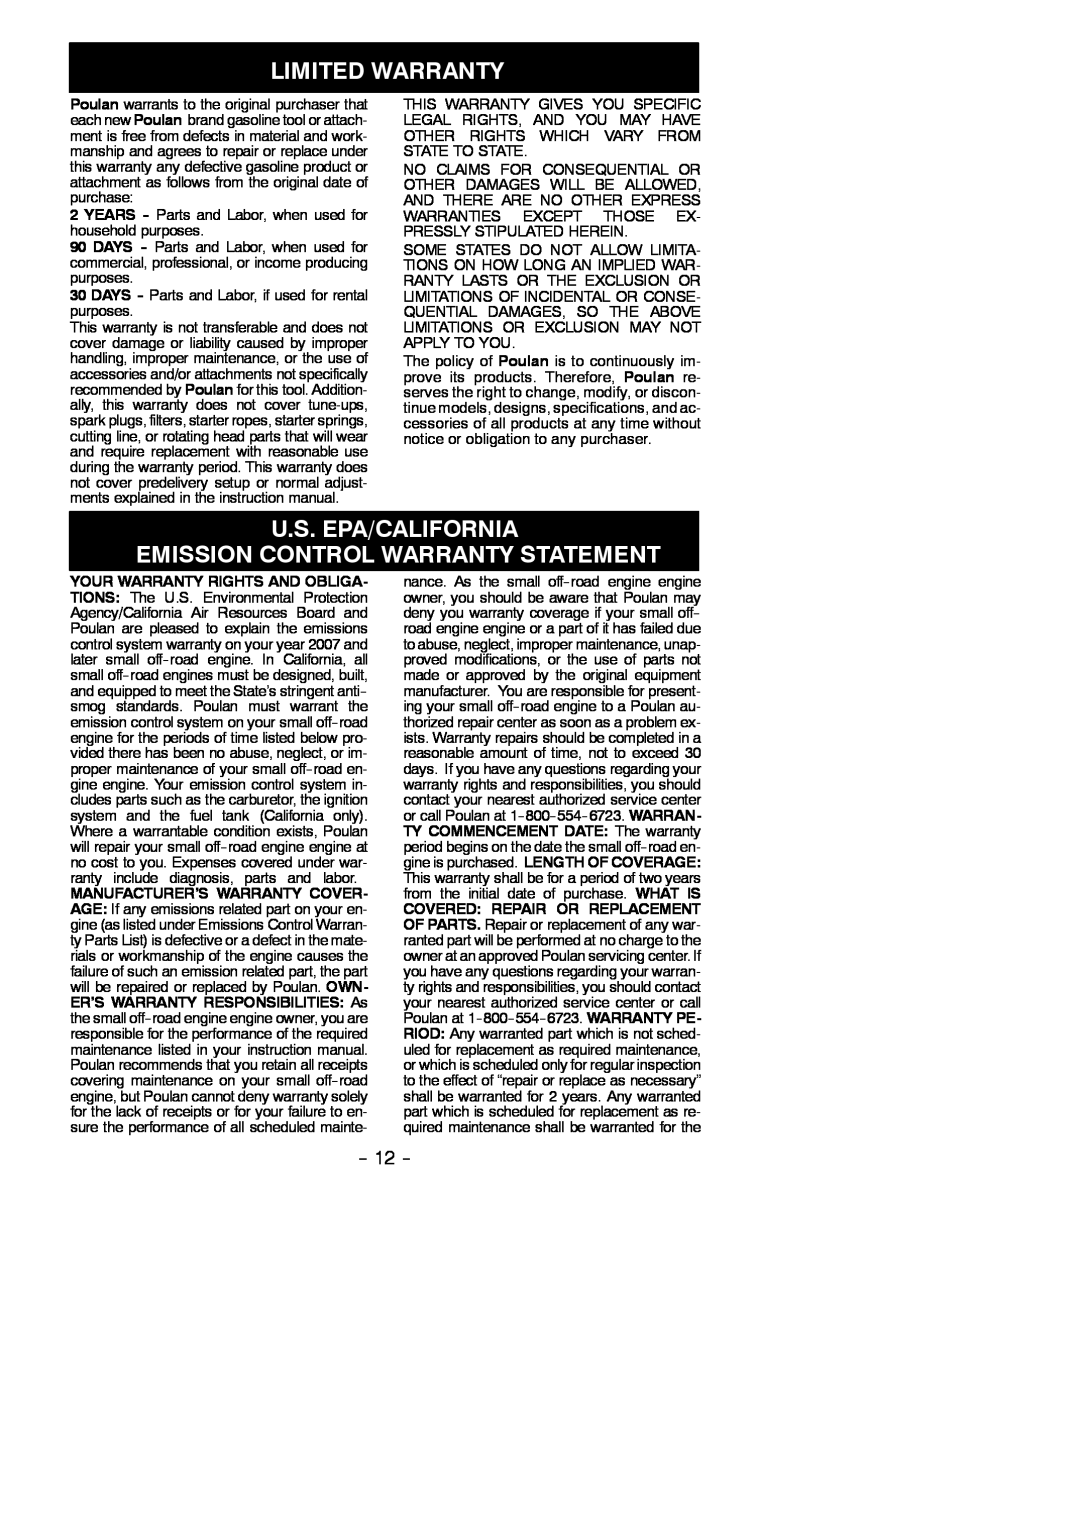 Poulan WT200 LE instruction manual Limited Warranty, U.S. Epa/California Emission Control Warranty Statement 